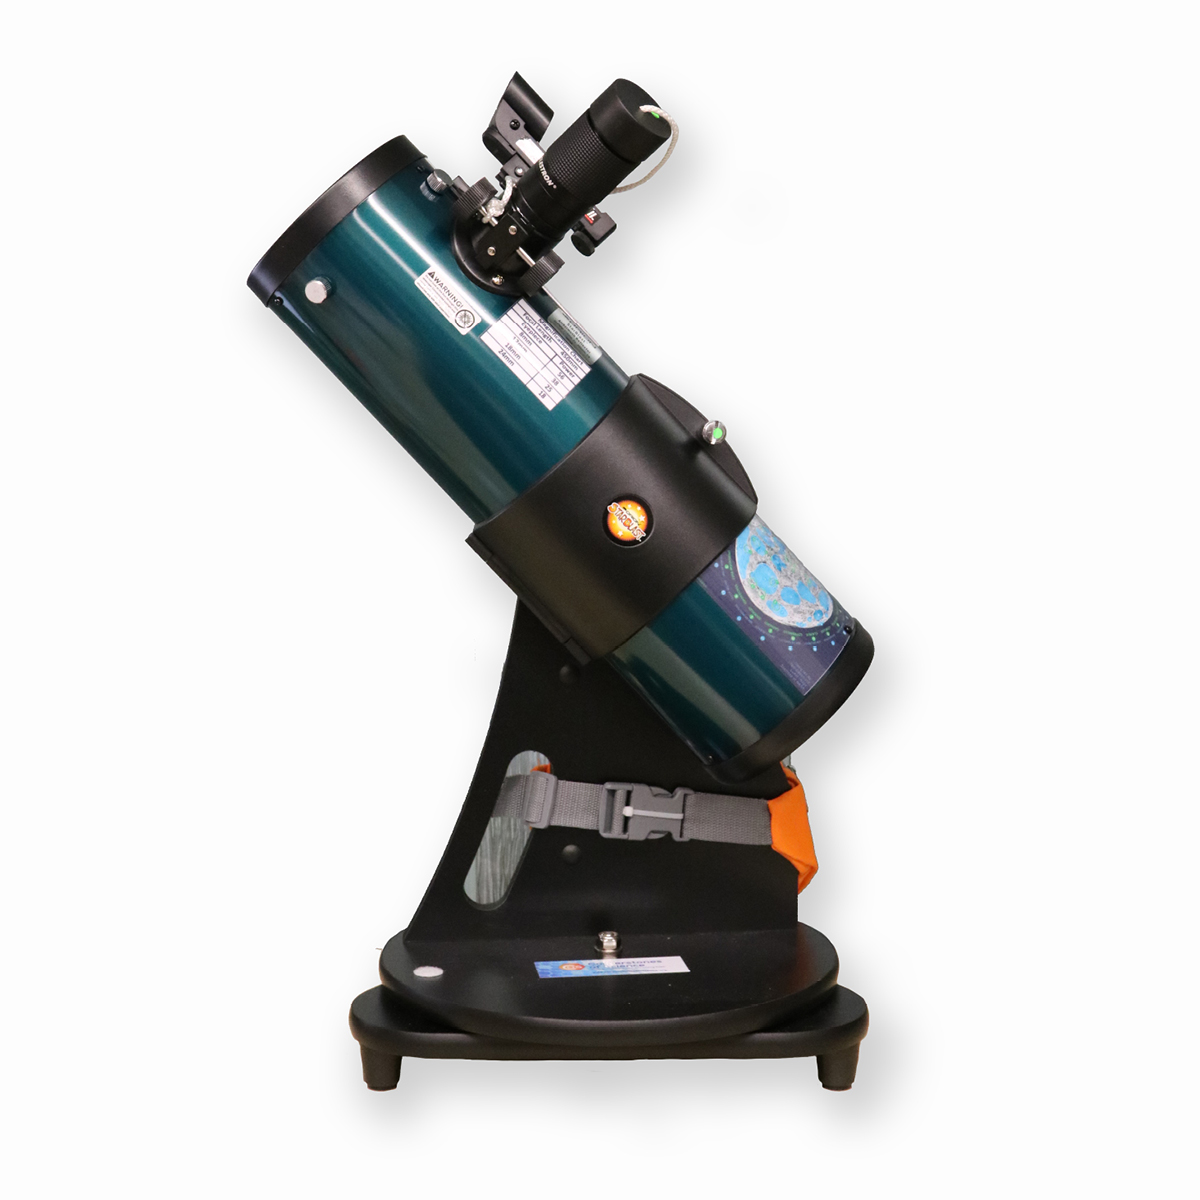 orion starblast 4.5 eq reflector telescope